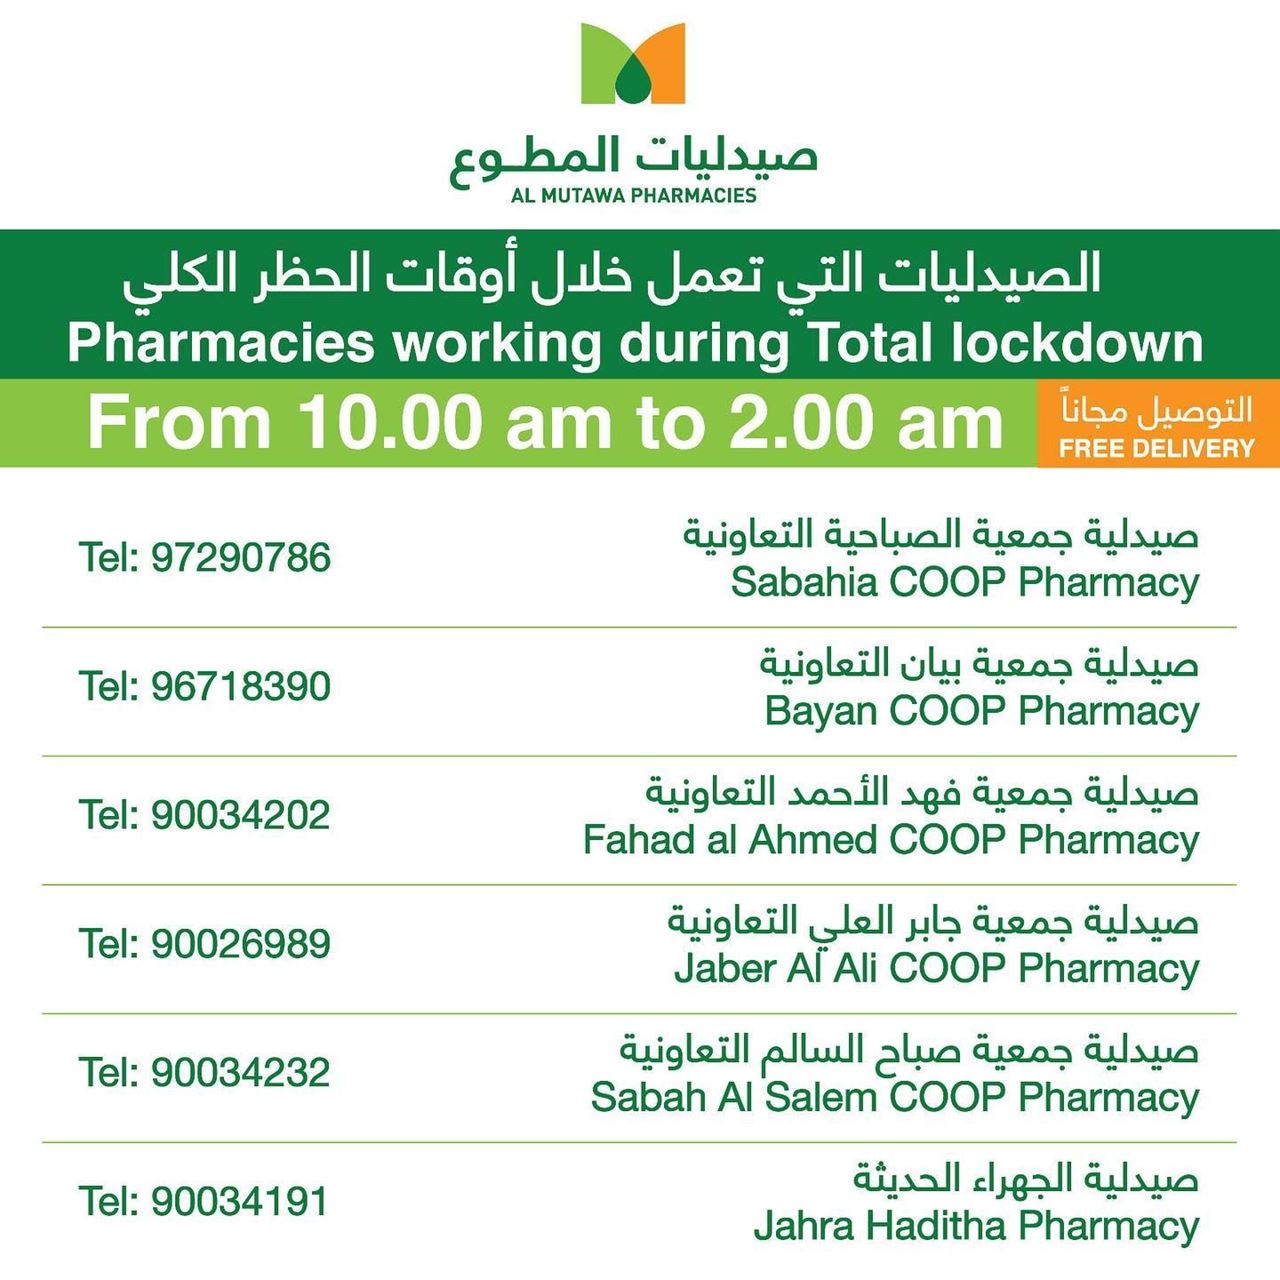 Al-Mutawa Pharmacies Operating during the Full Curfew